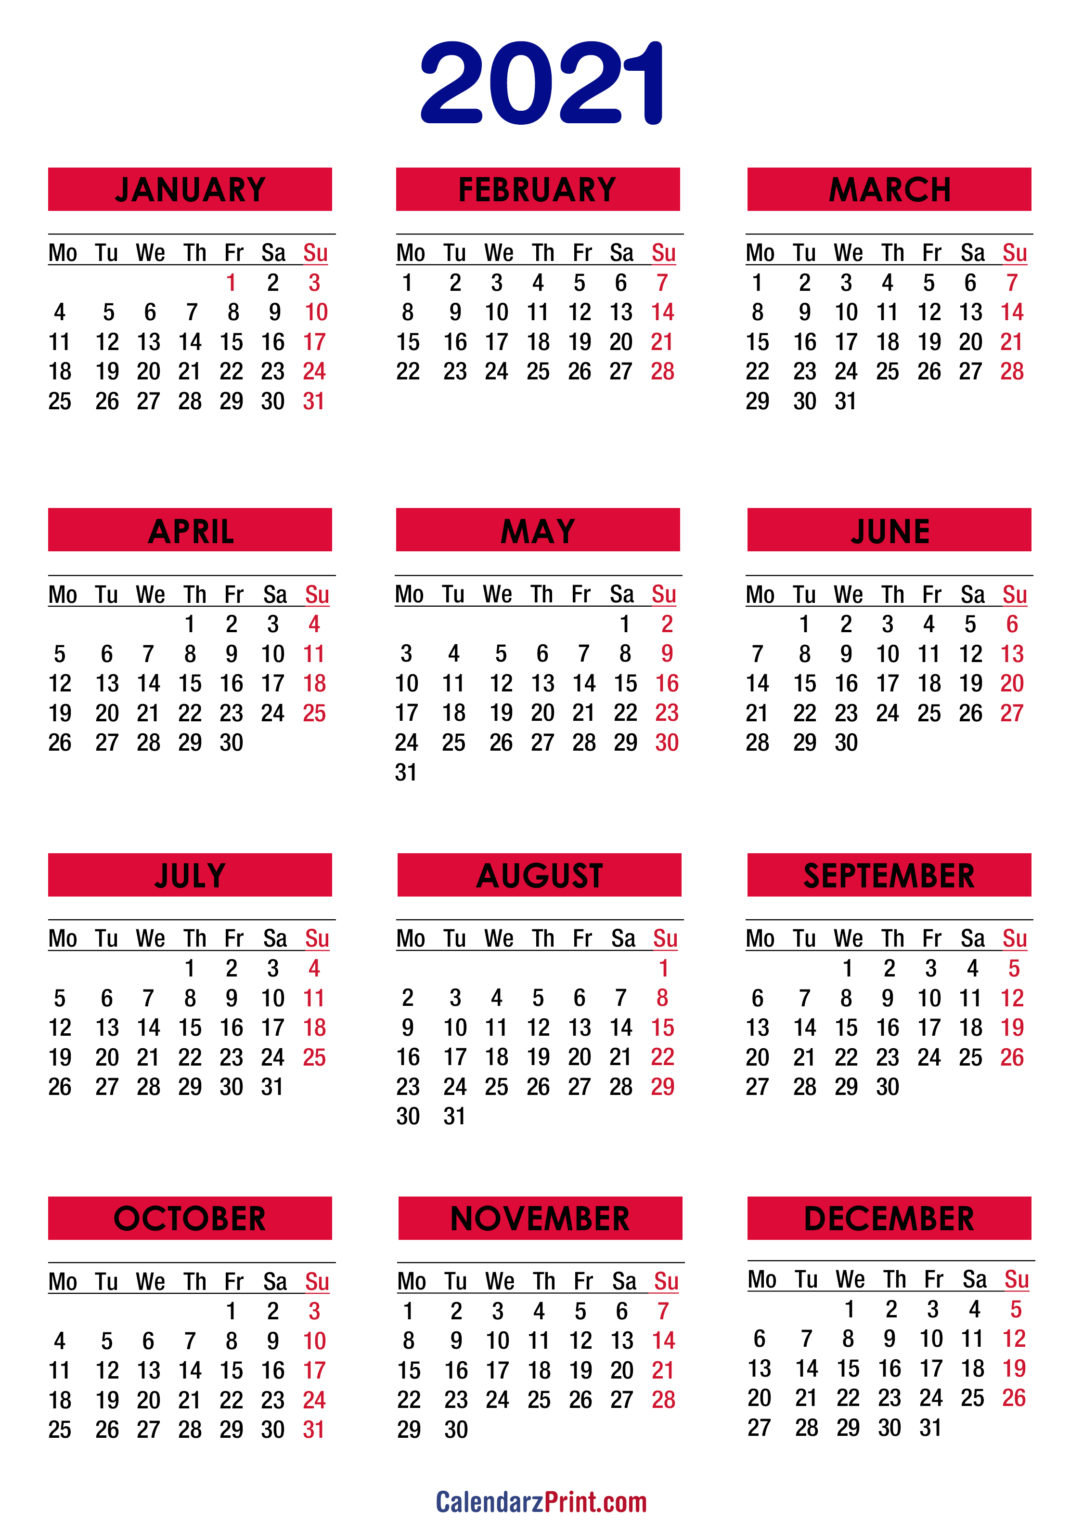 2021 Calendar Printable Free Colorful Monday Start Calendarzprint Free Calendars 2435